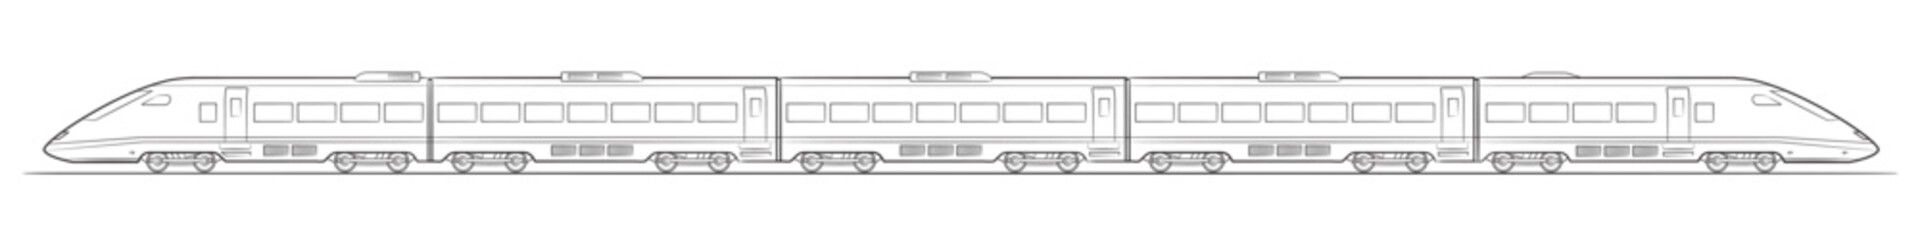 Modern super fast train - outline vector stock illustration.